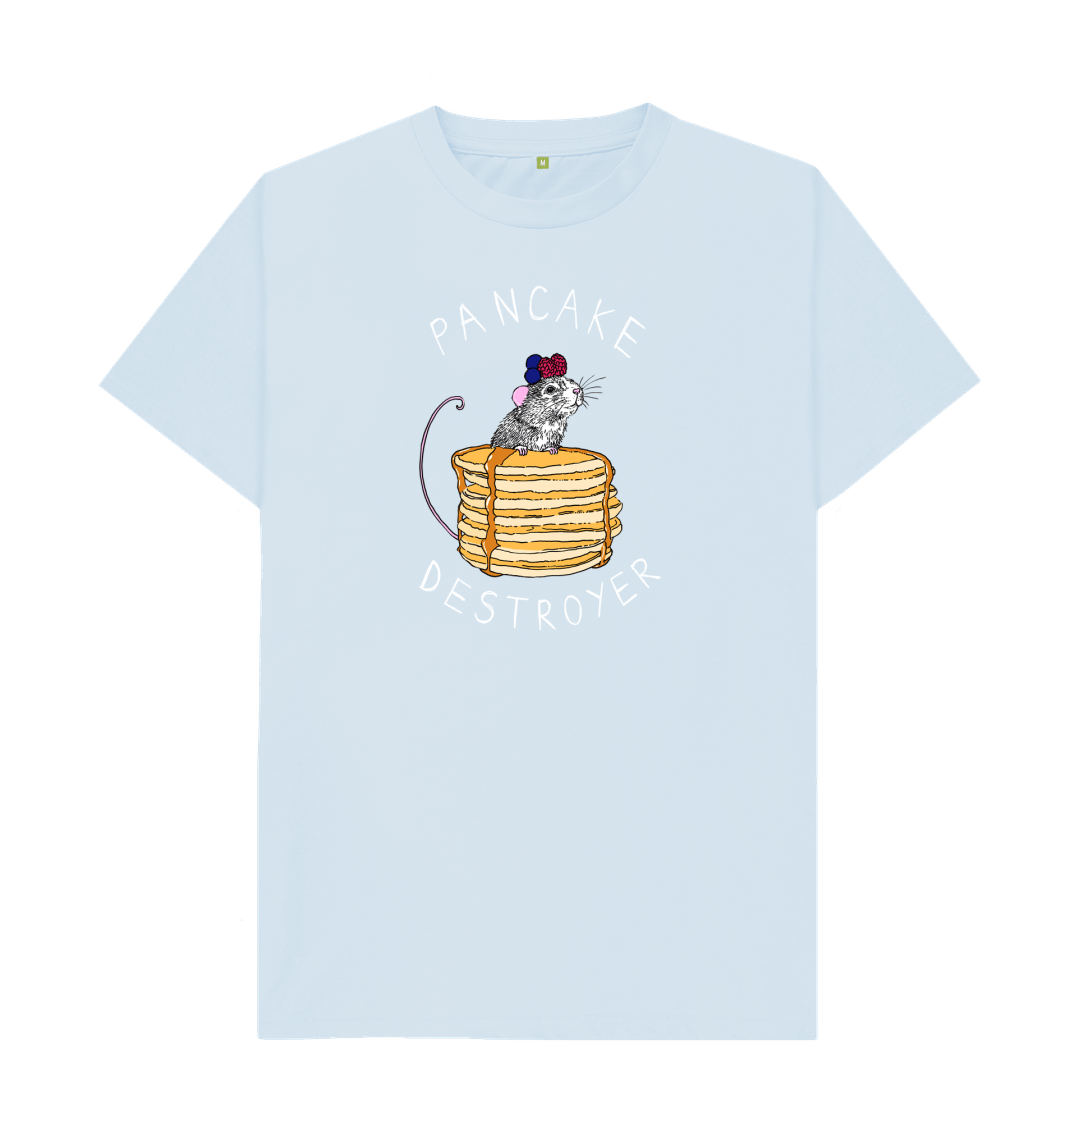 Sky Blue 'Pancake Destroyer' Men's T-shirt